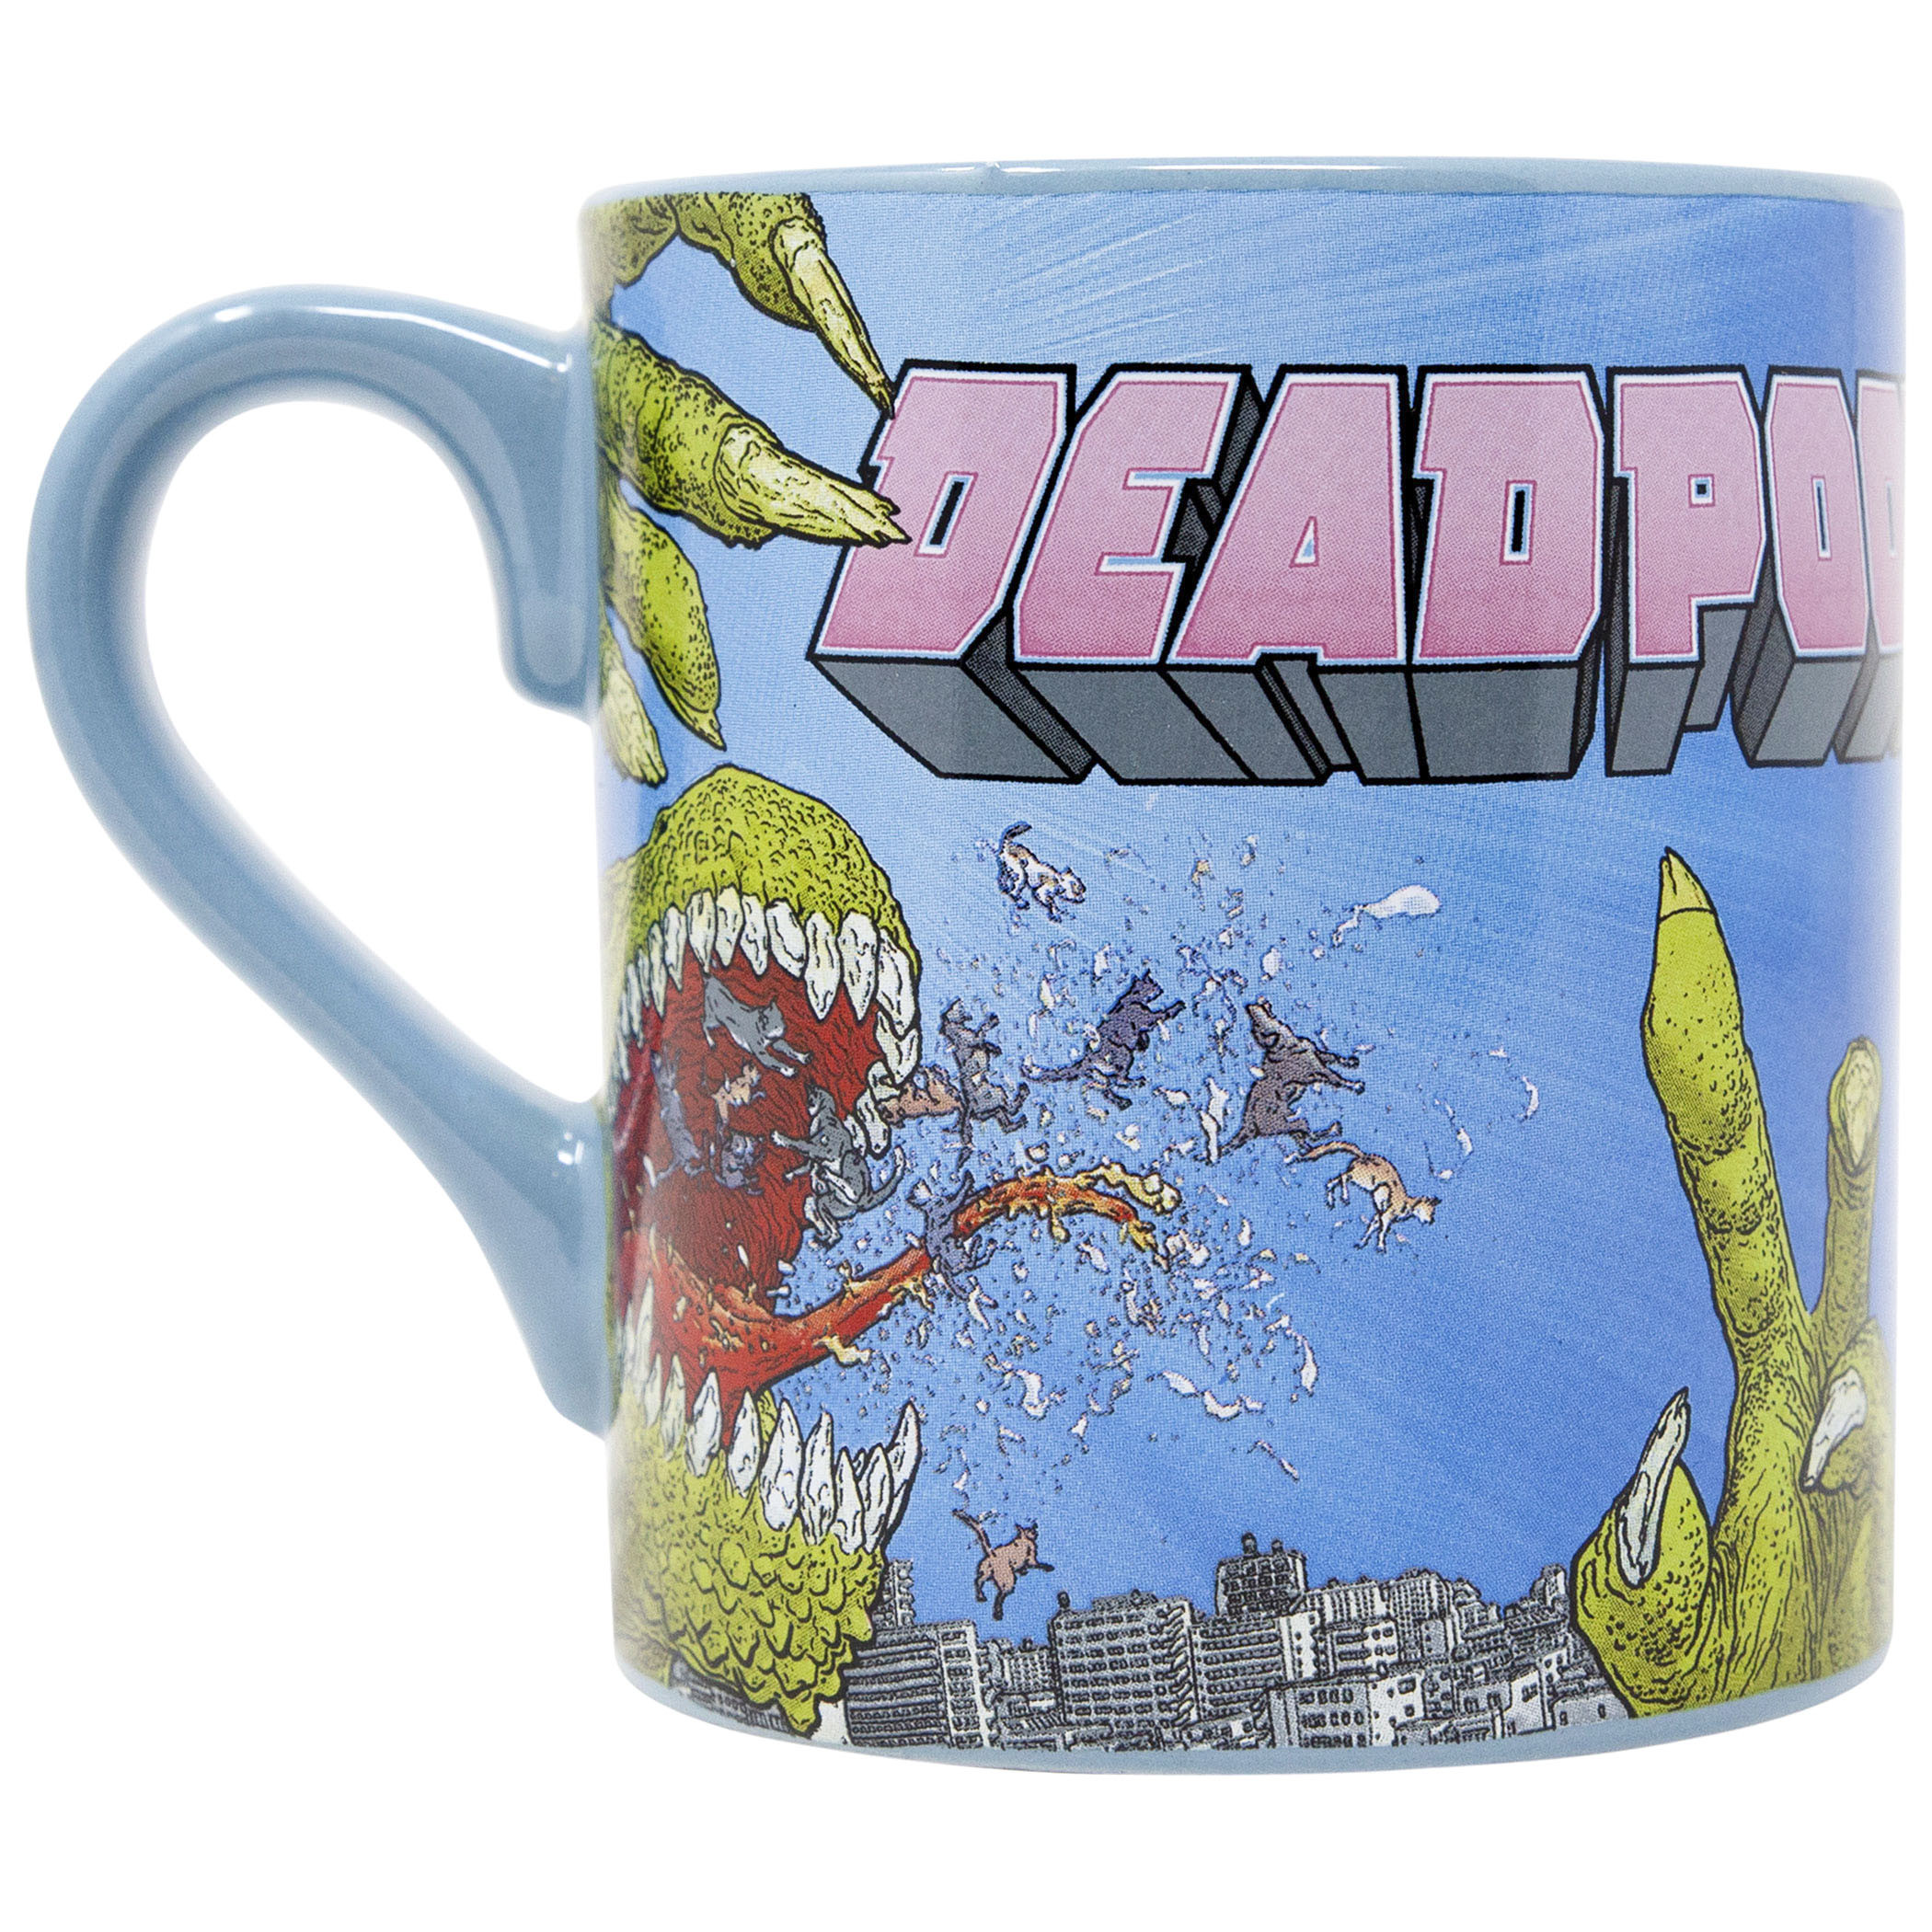 Deadpool Best Mug Ever! Unicorn-Styled 14 Ounce Ceramic Mug